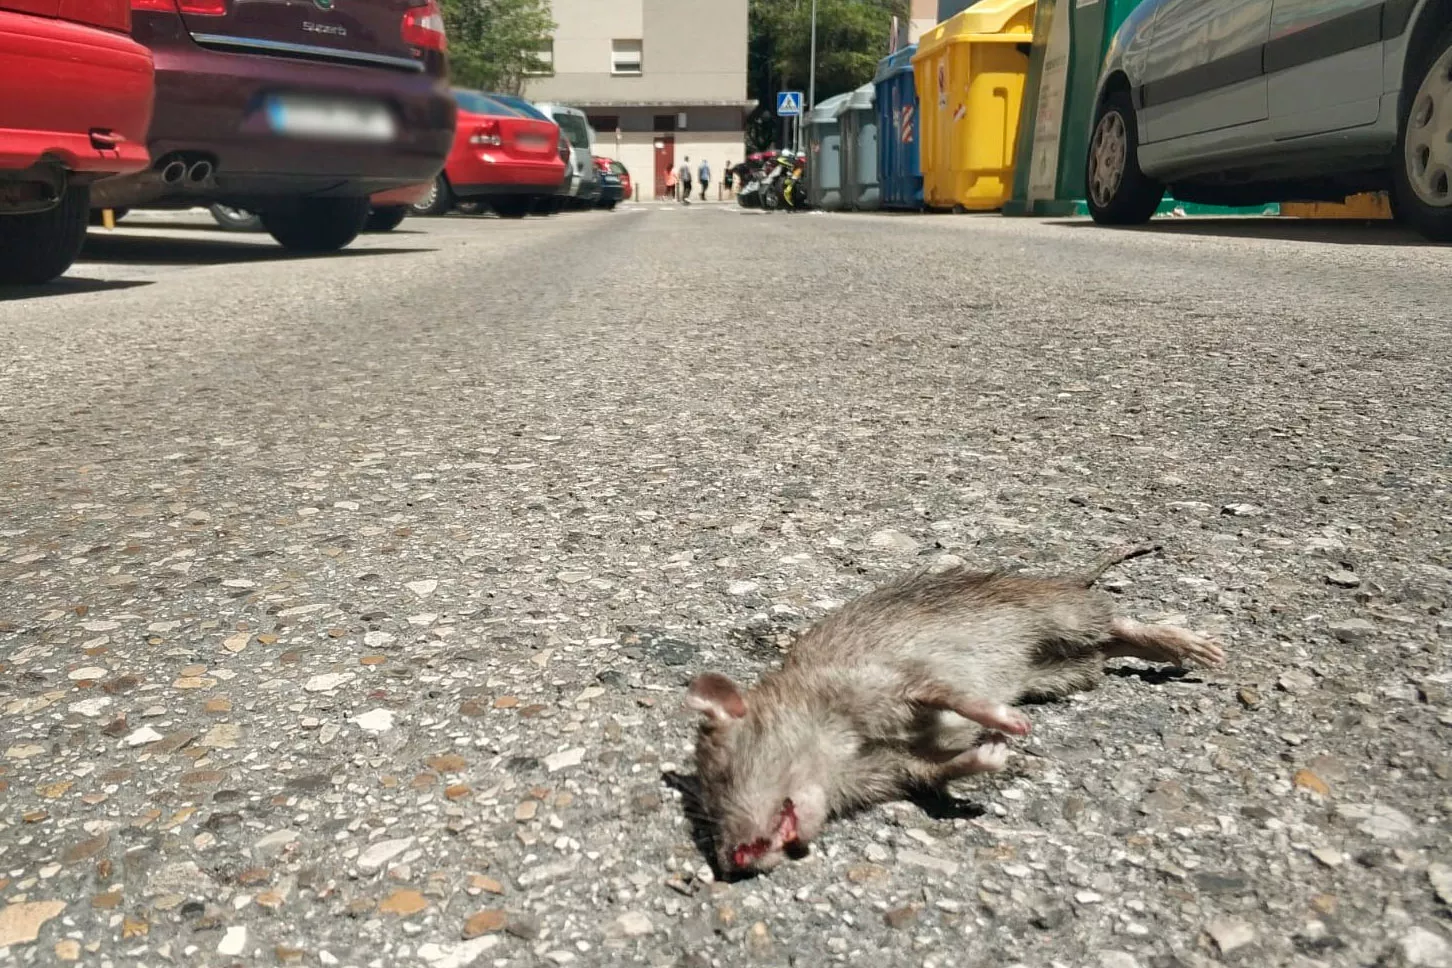 La A.VV. Manuel de Falla denuncia la presencia de roedores en las calles de La Laguna.